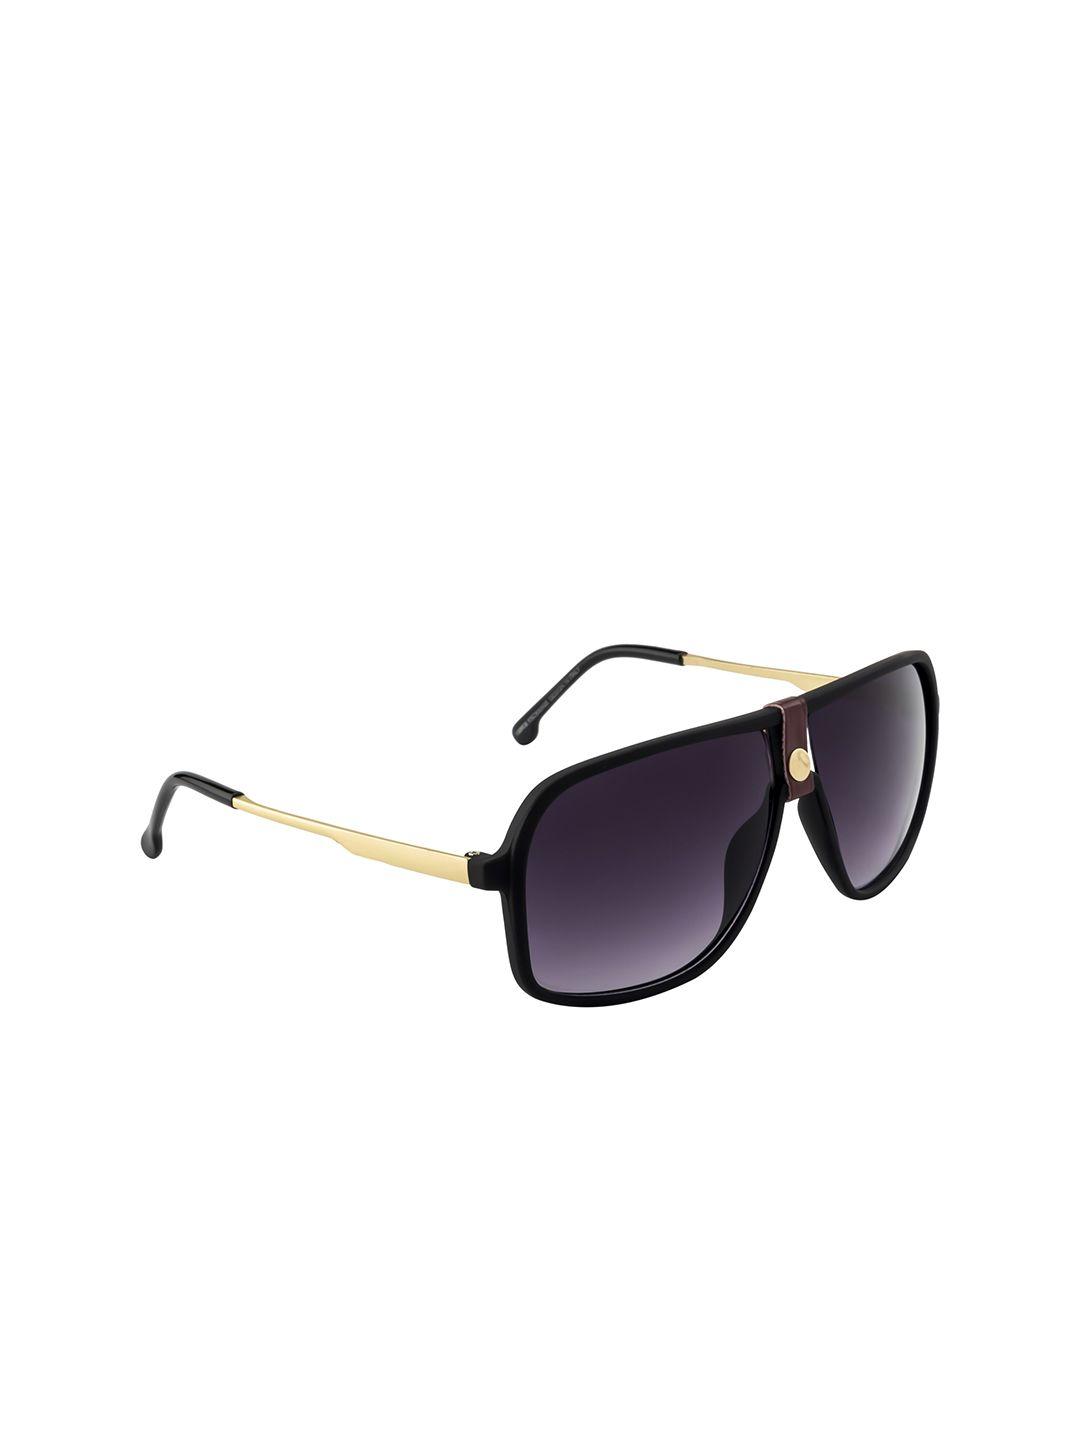 mast-&-harbour-full-rim-square-sunglasses-with-uv-protected-lens-mh-m25109